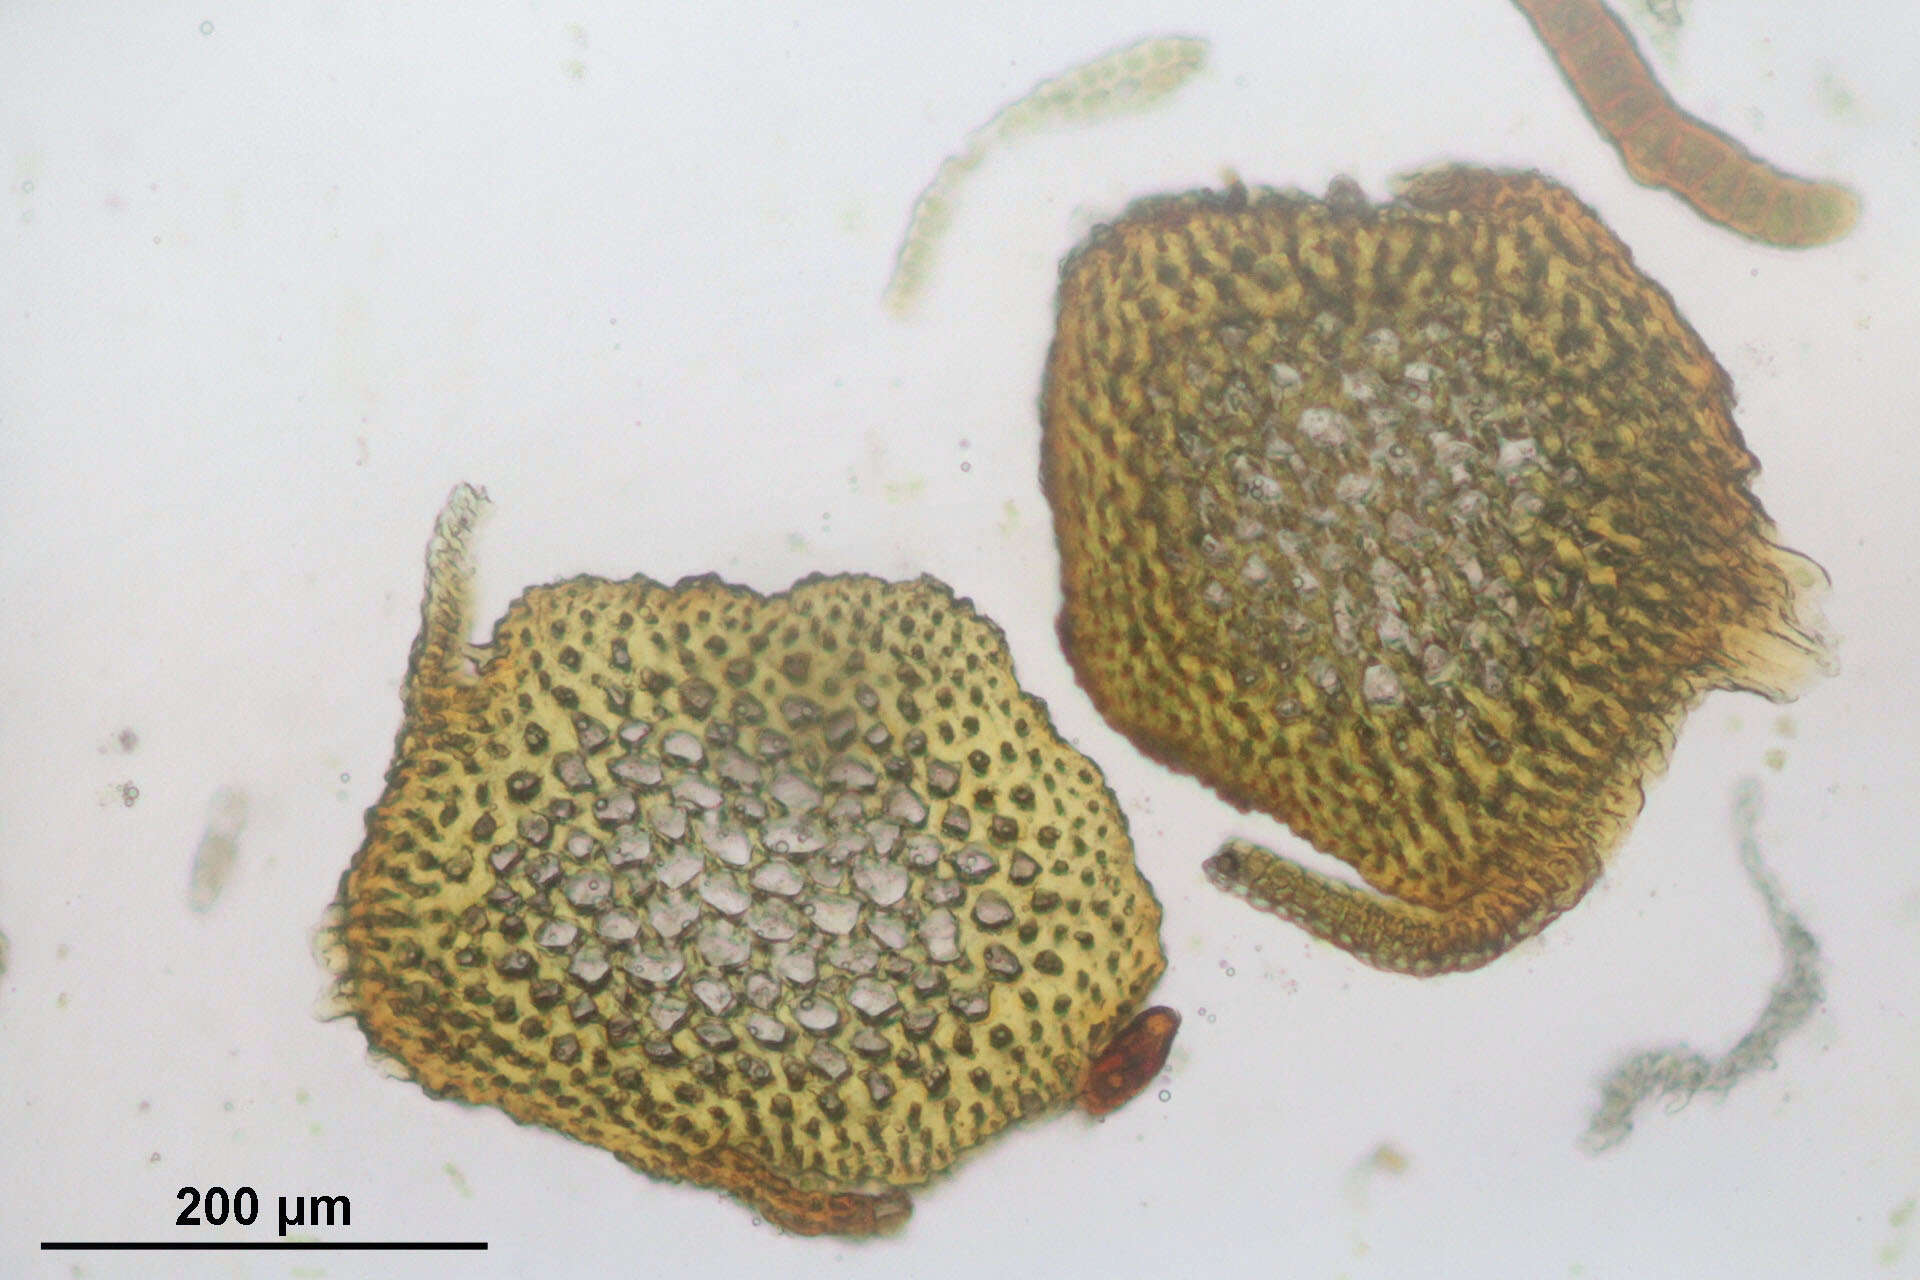 Image of Lyell's orthotrichum moss